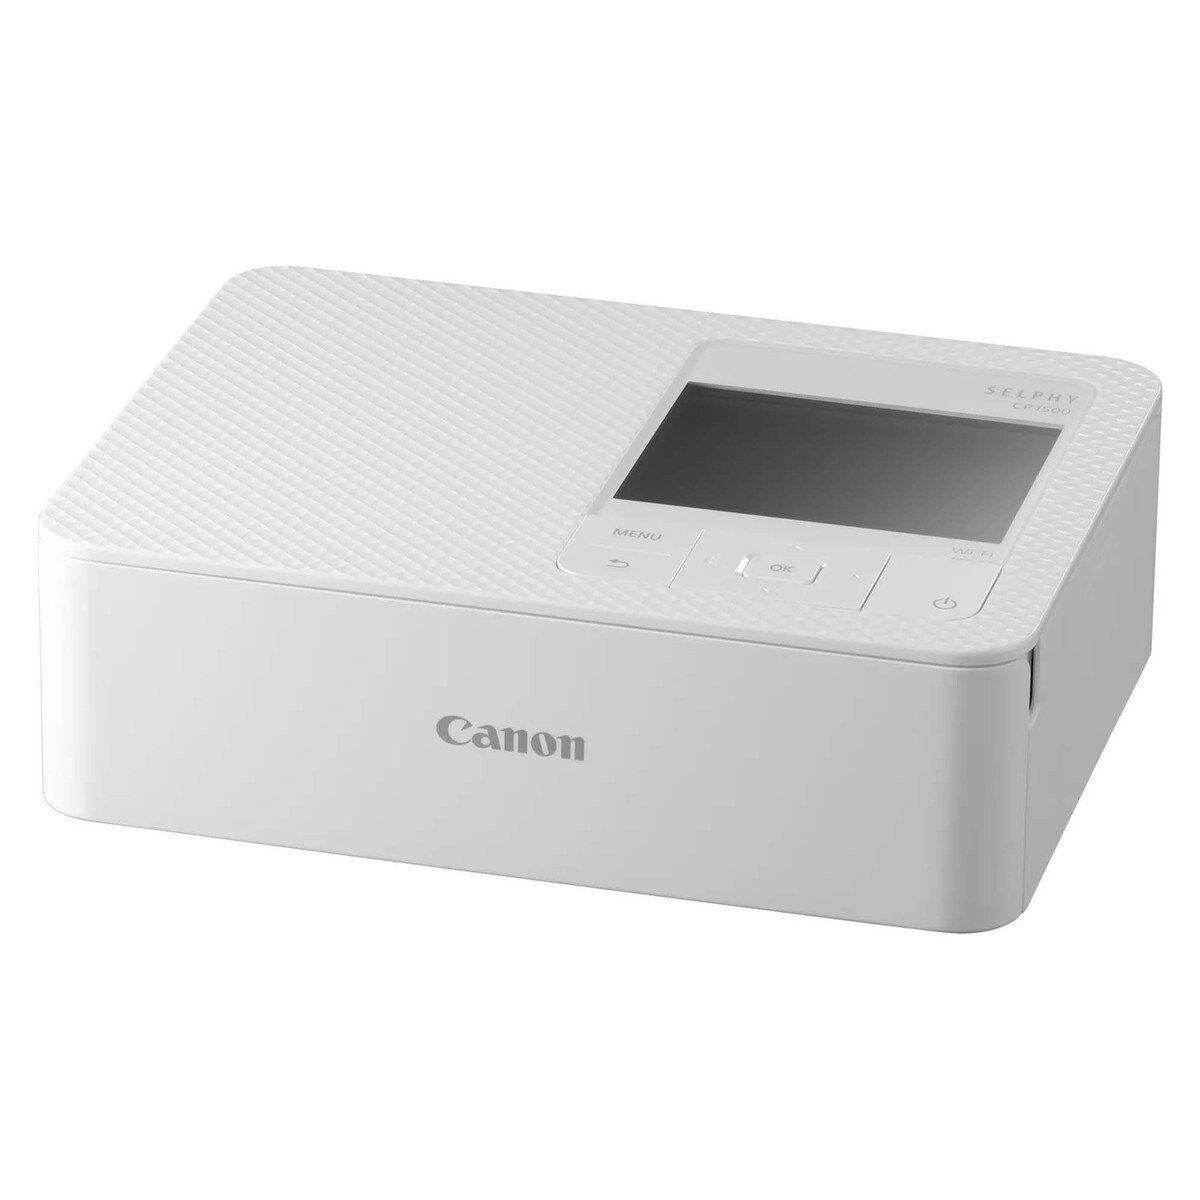 Canon SELPHY CP1500 Colour Portable Photo Printer - White + Canon RP-108 Colour Ink + 100 x 148 mm Paper Set, 108 Sheets